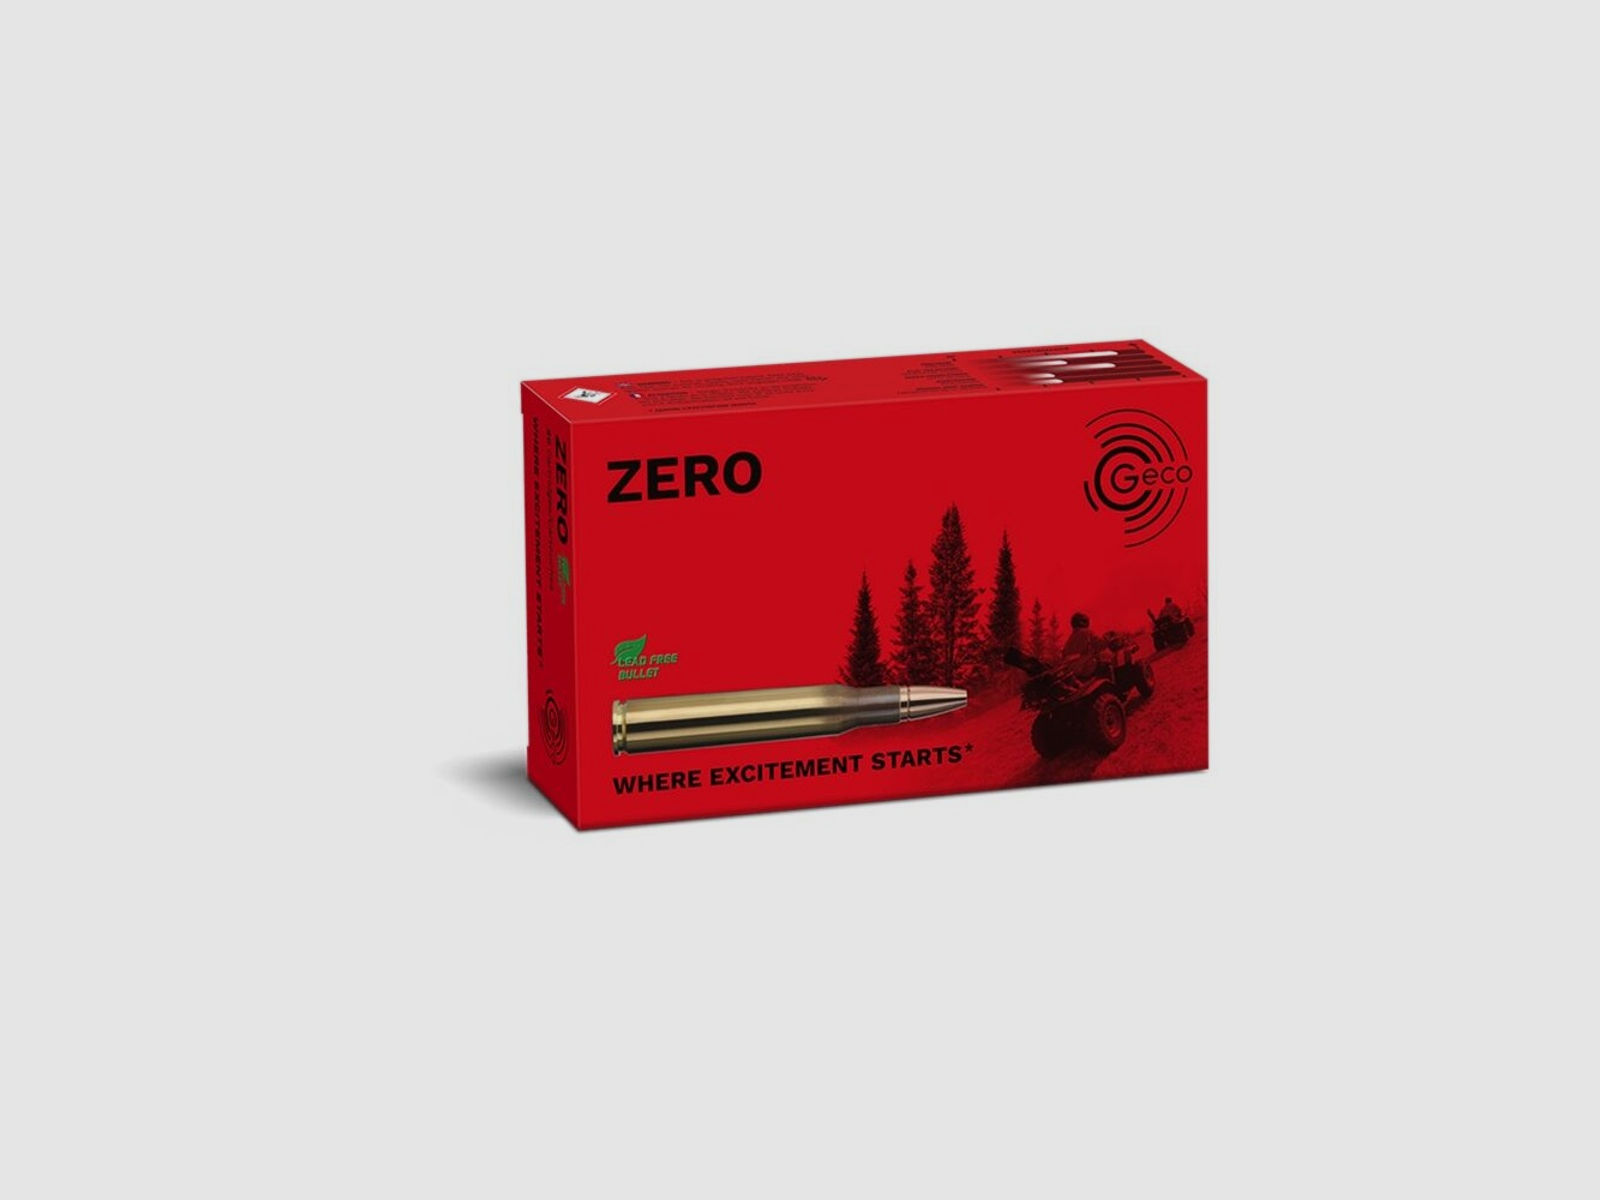 Geco .300 Win. Mag. ZERO 8,8 g / 136 gr - 20 Stück